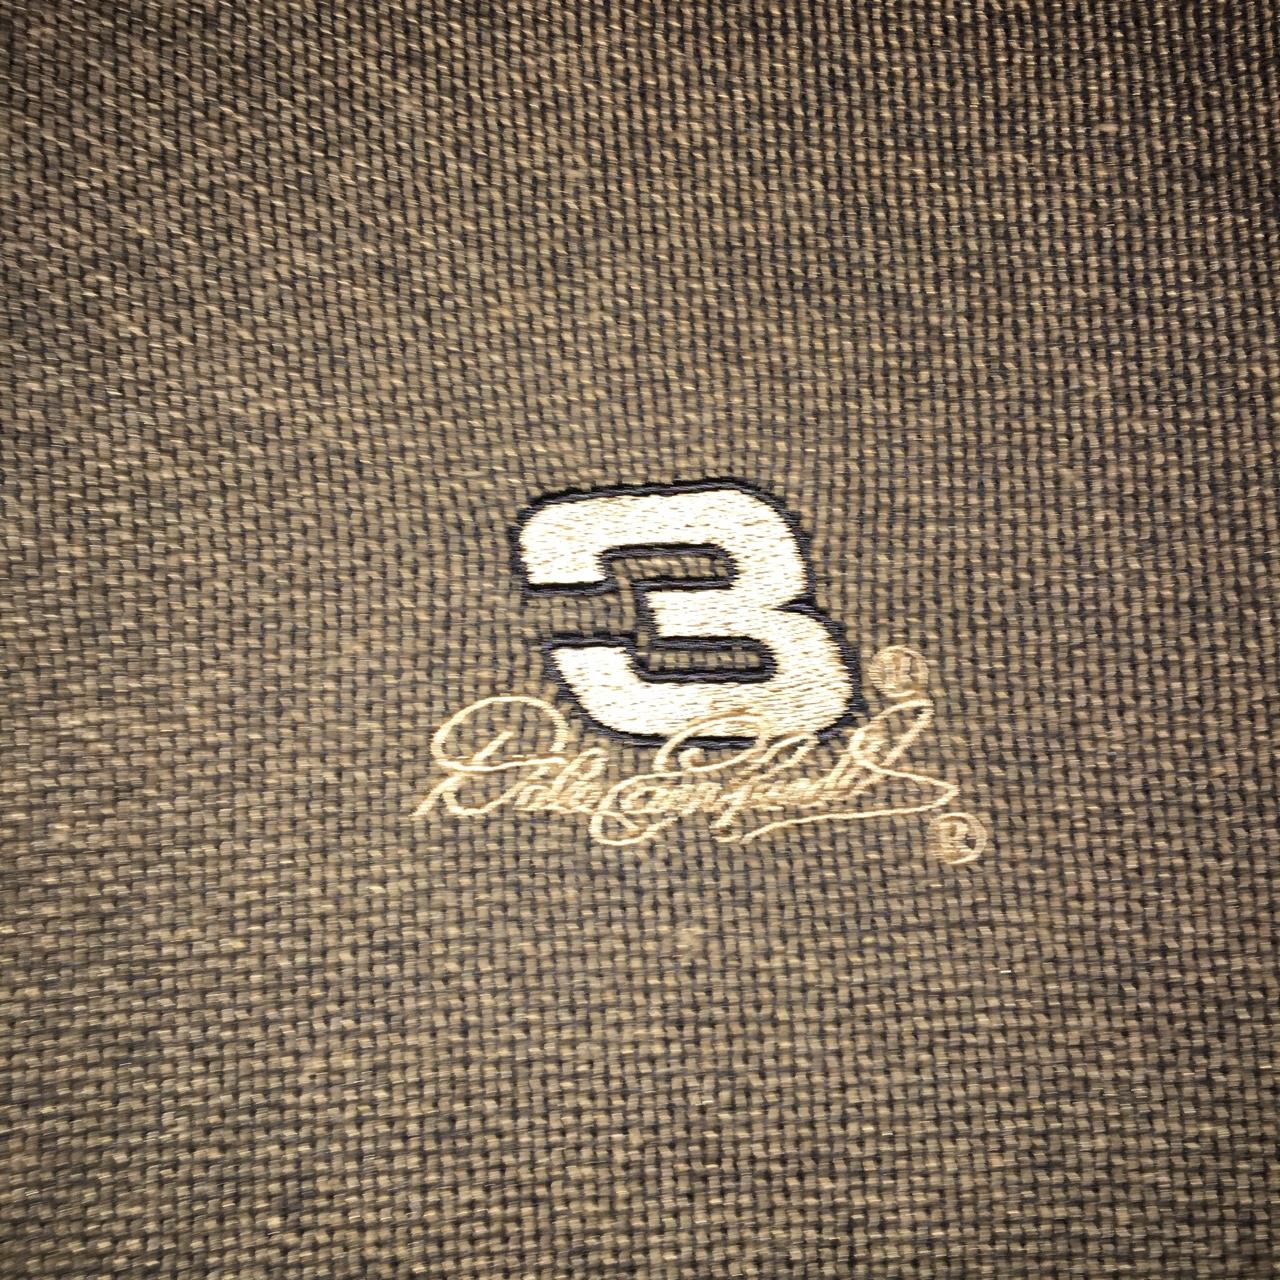 Chase Authentics Men's Brown Sweatshirt (3)